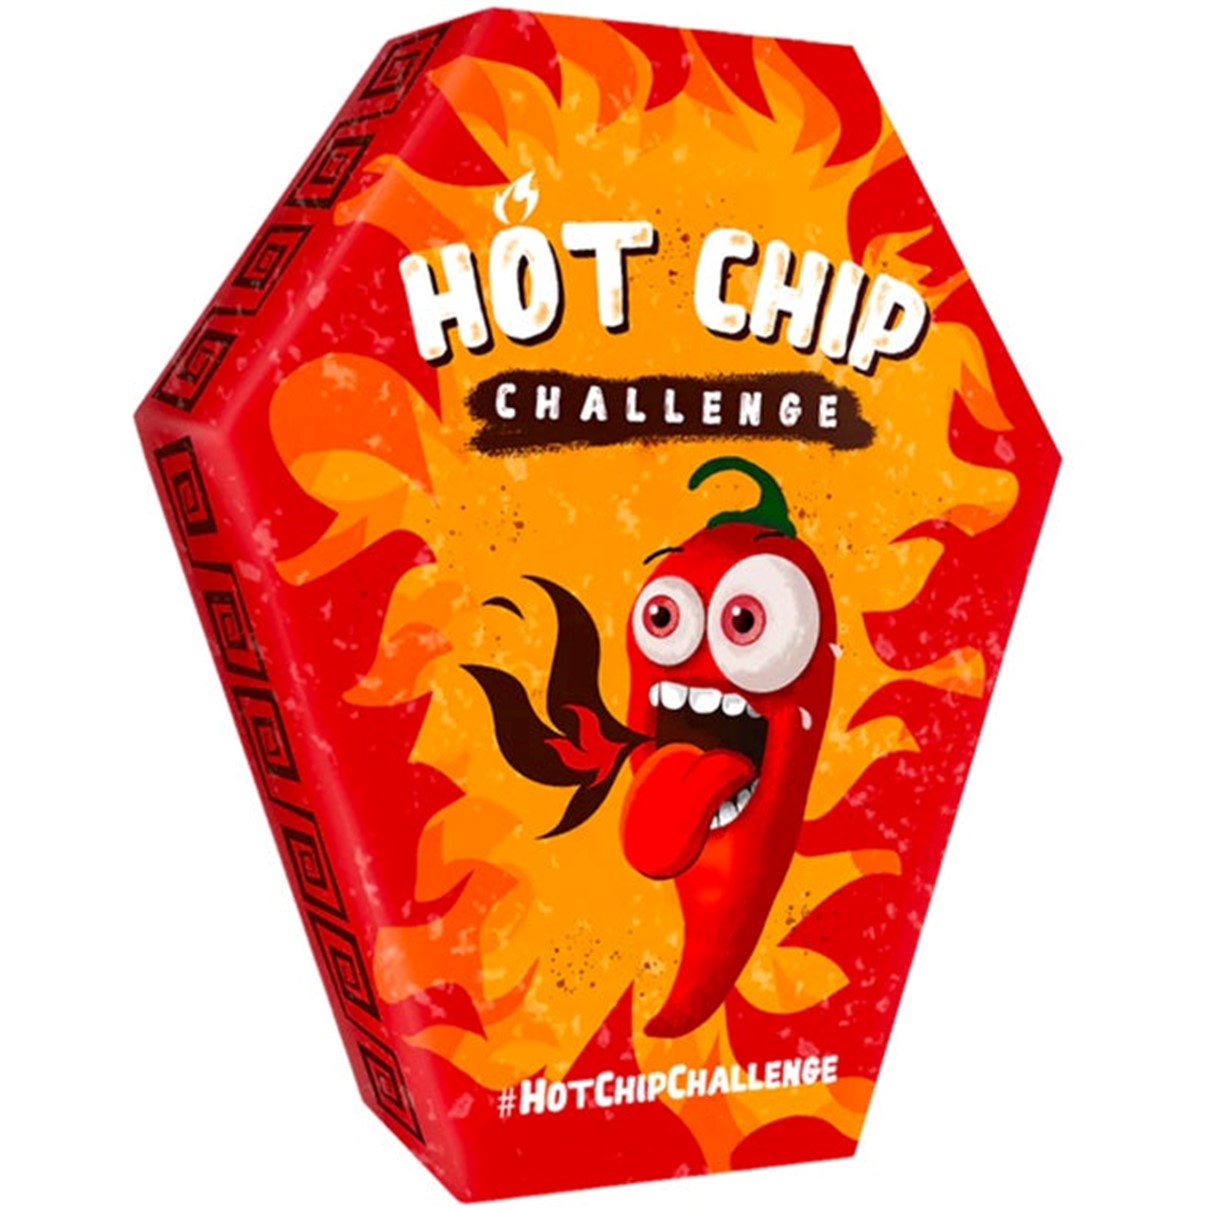 Hot chip